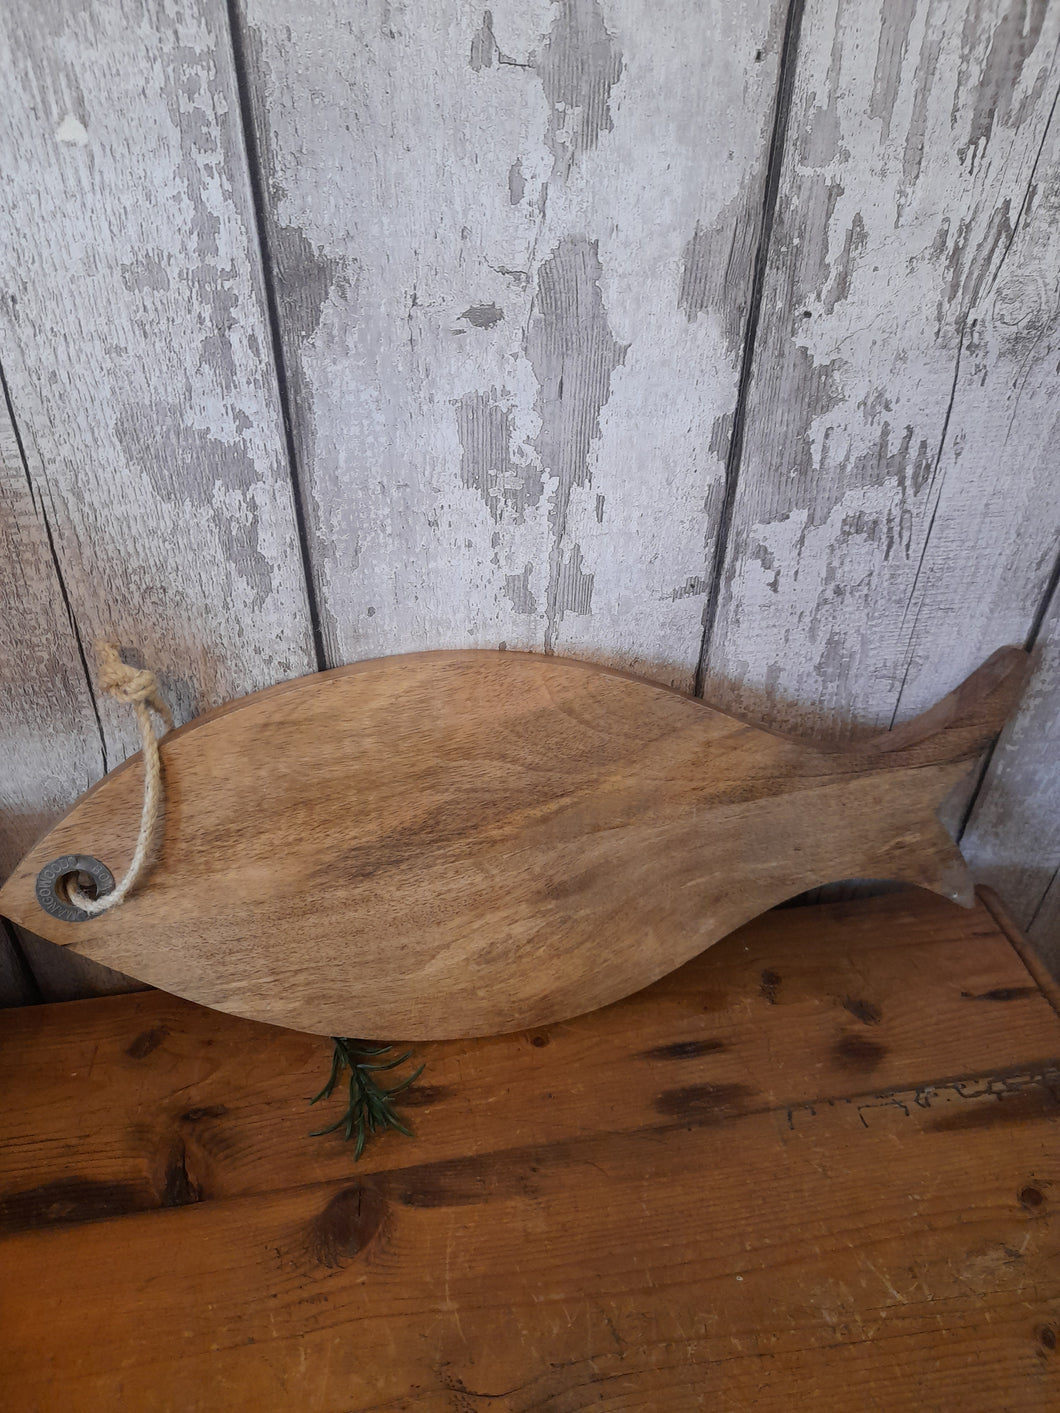 Fish shaped chopping board